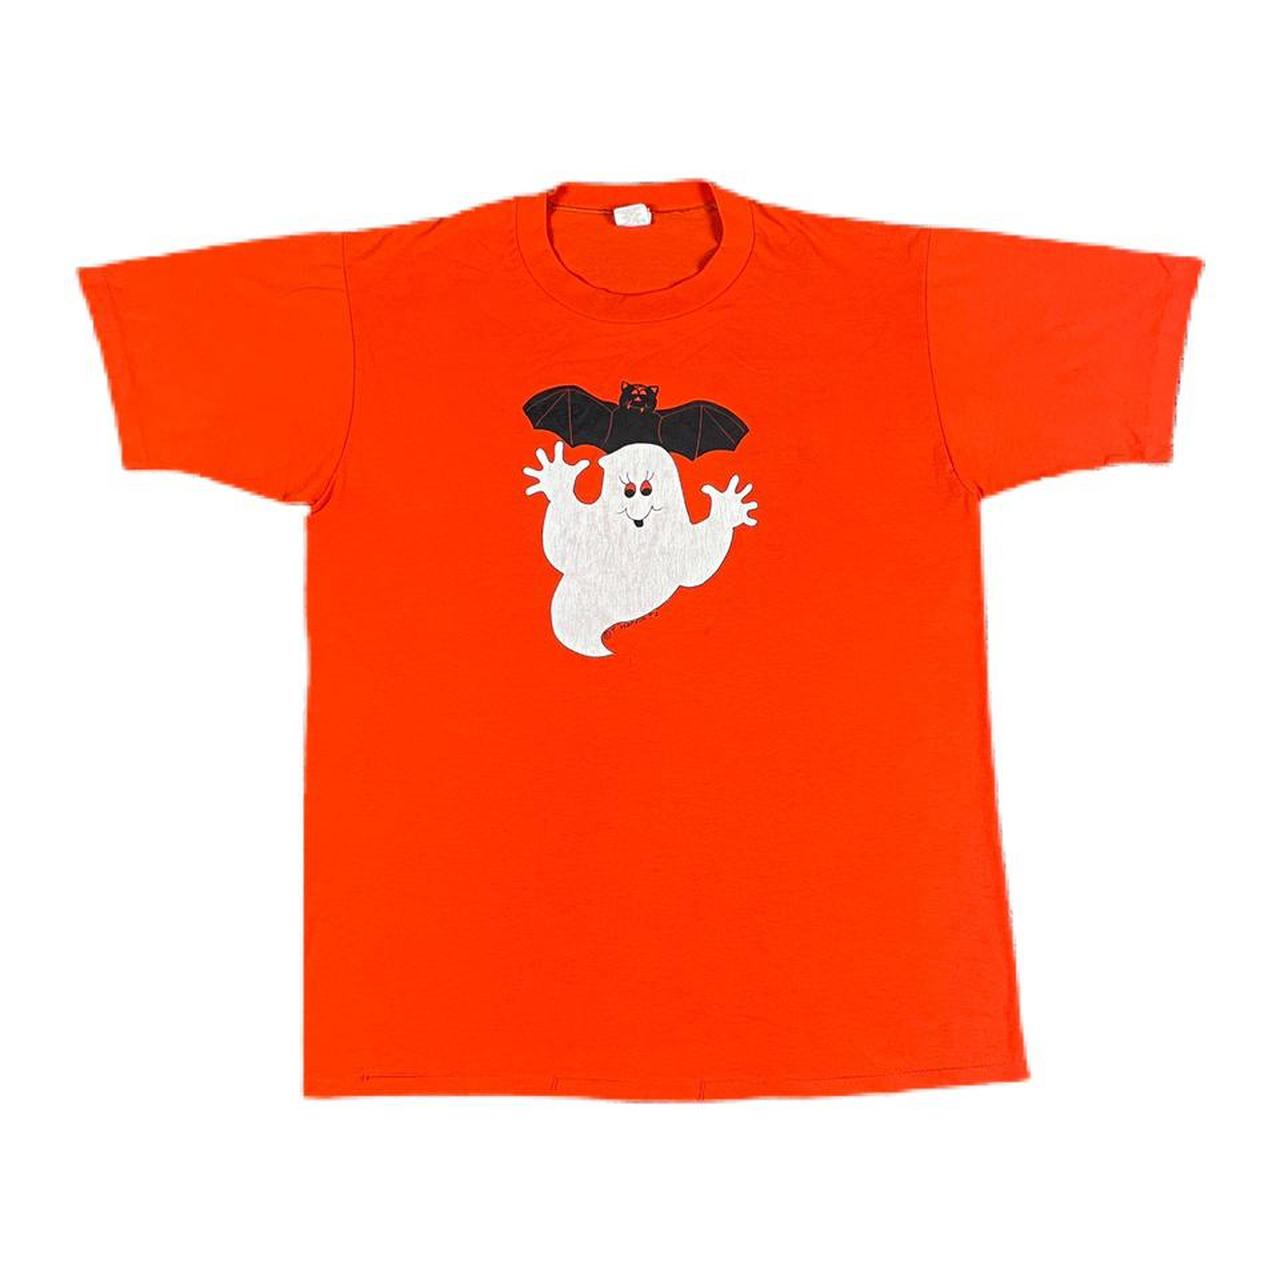 Men's Orange T-shirt